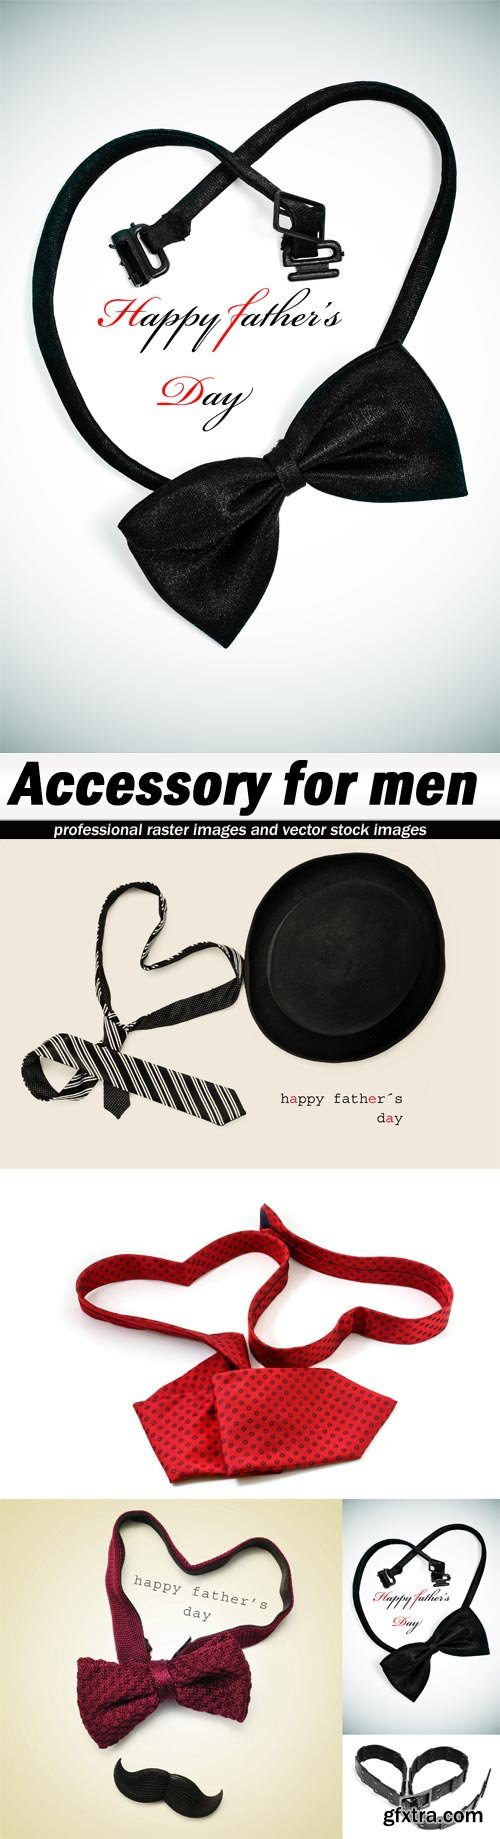 Accessory for men